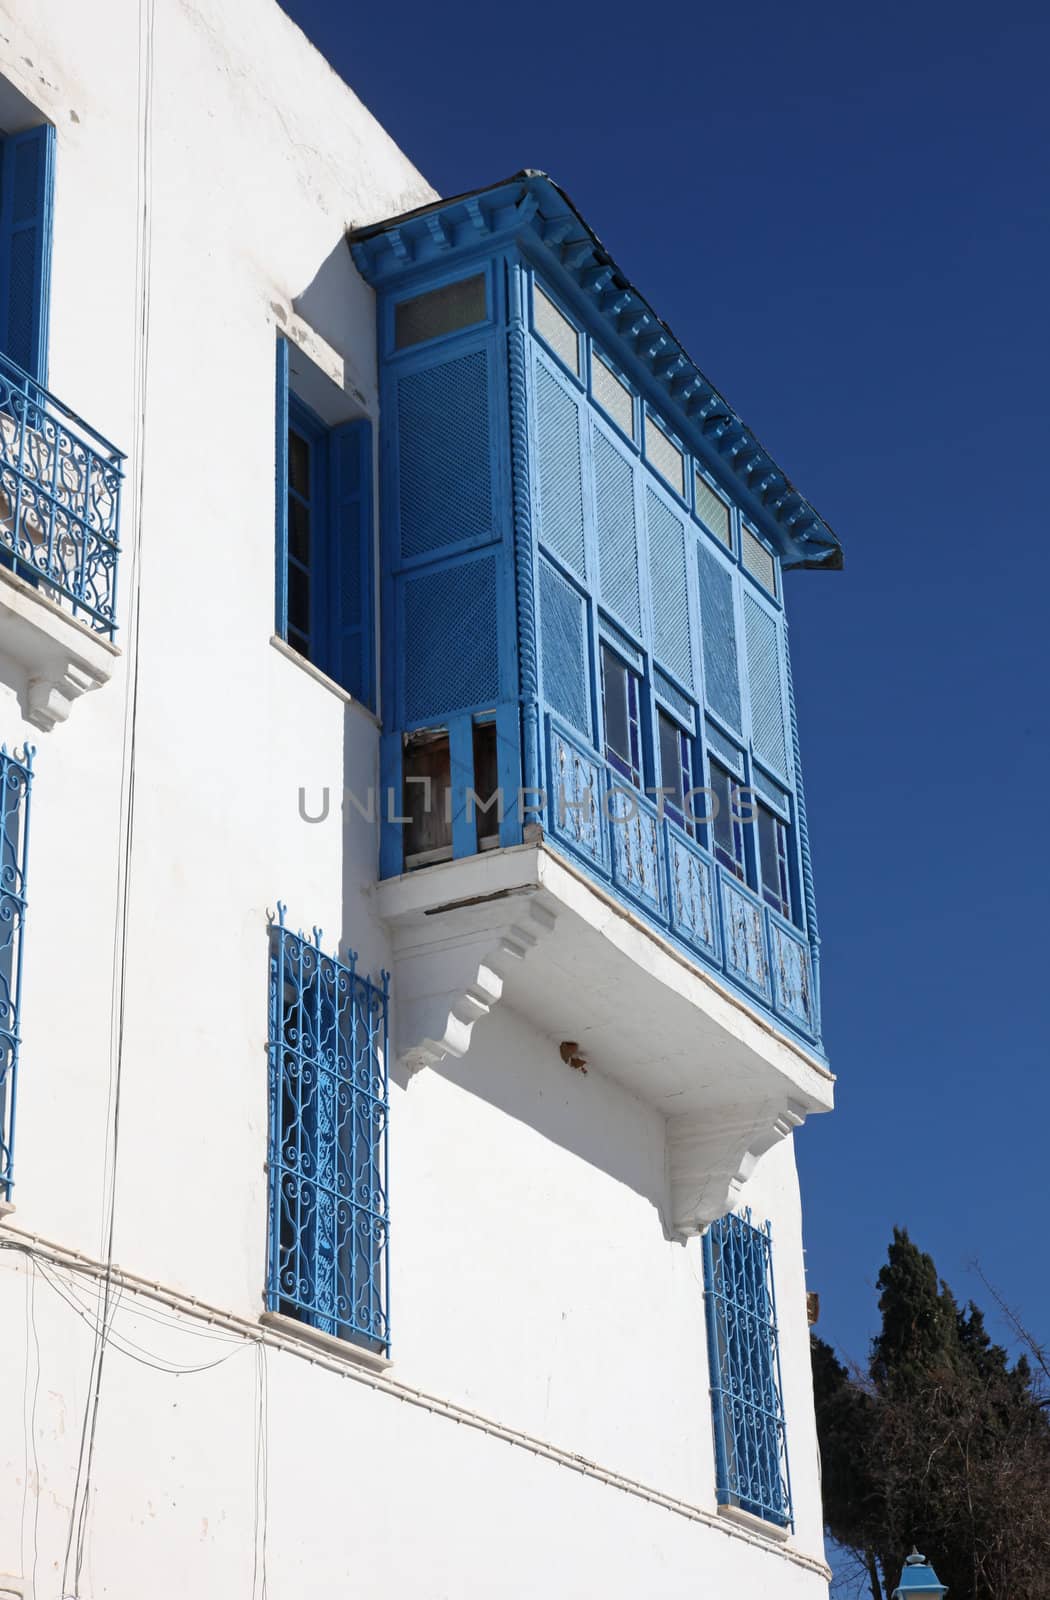 Traditional window from Sidi Bou Said, Tunis by atlas